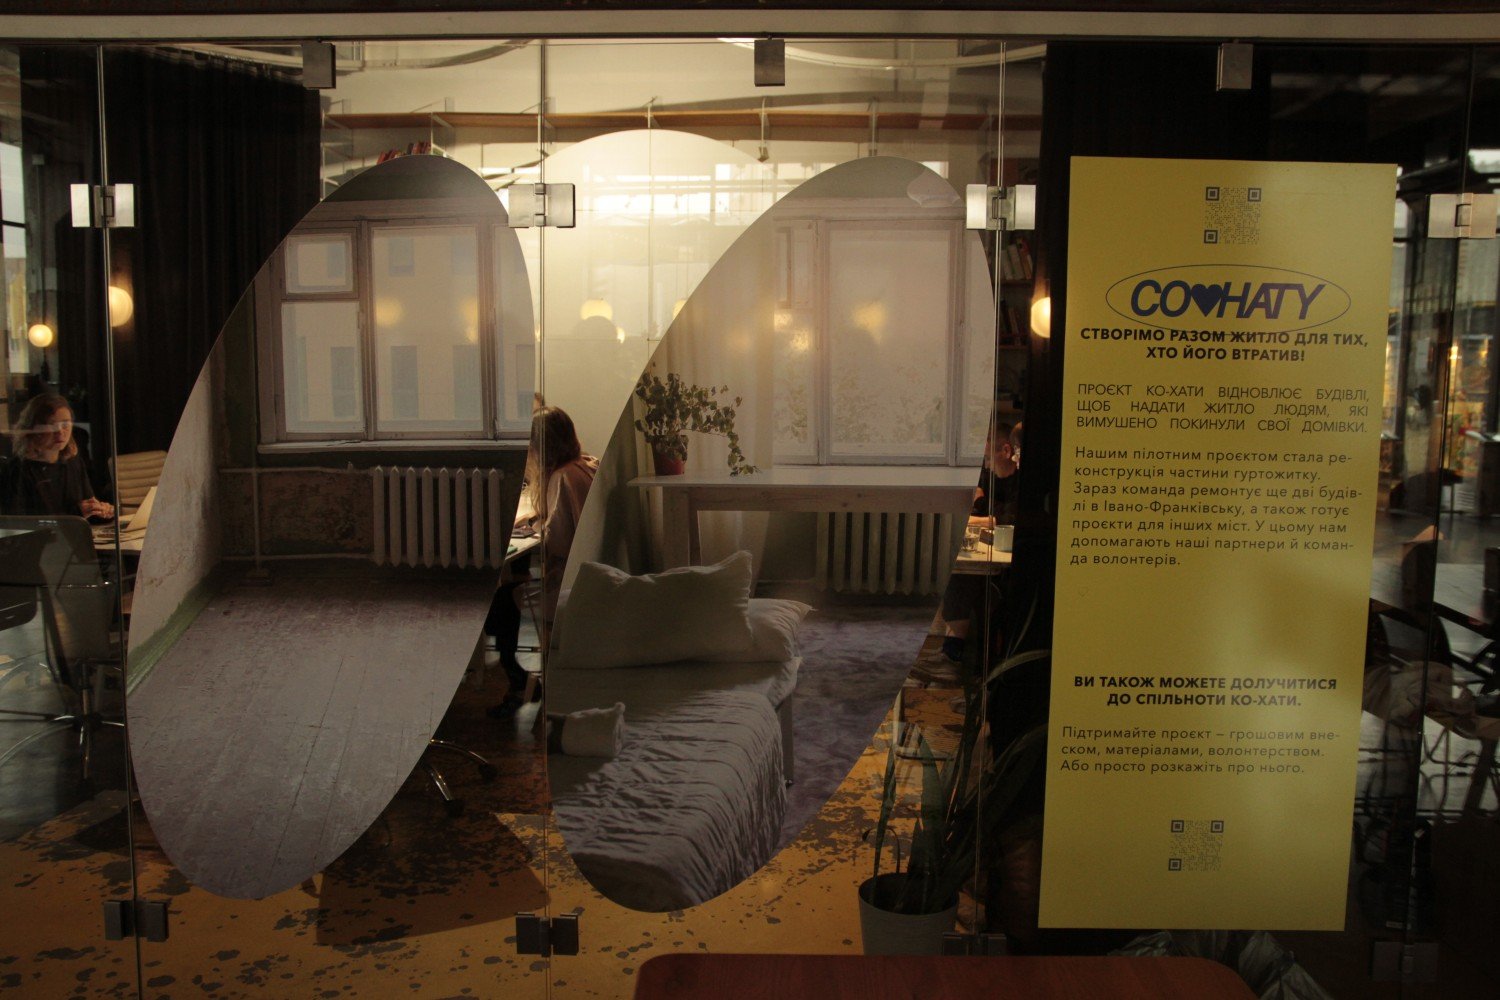 Plakat Projektu CoHaty na drzwiach do Metalabu, Promprylad Renovation / fot. L. Włodek